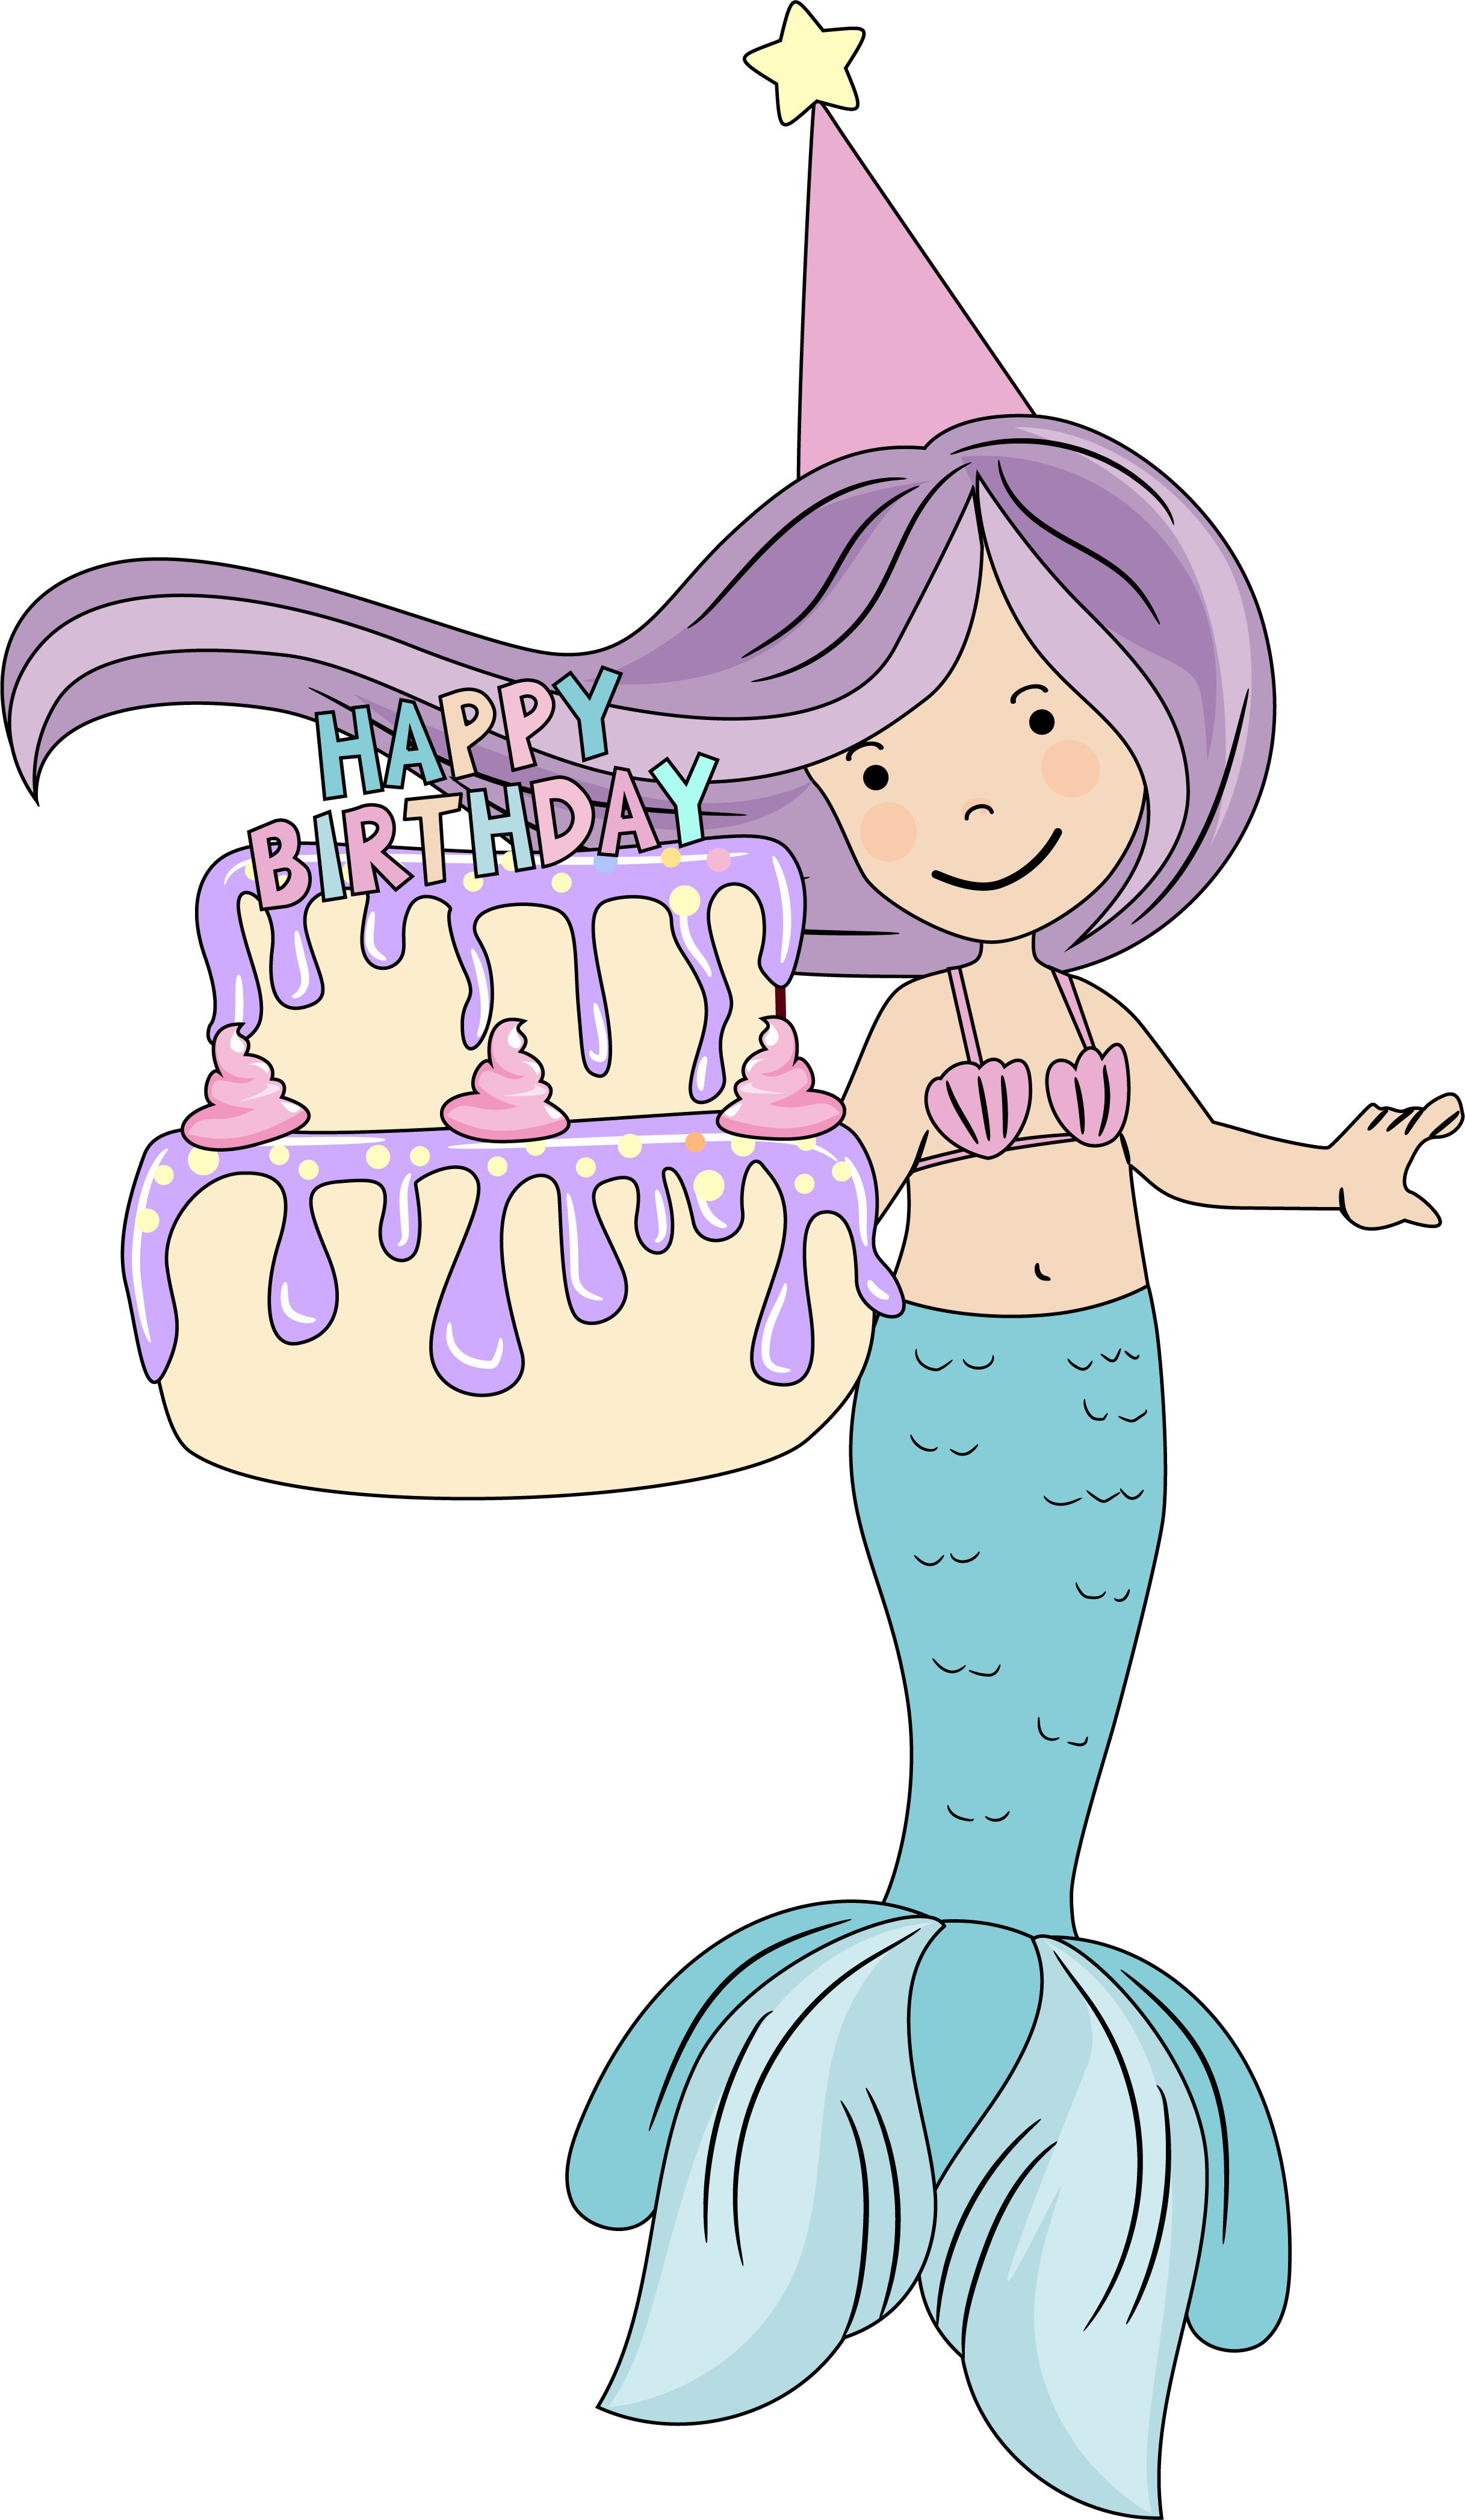 A mermaid is holding a festive cake.